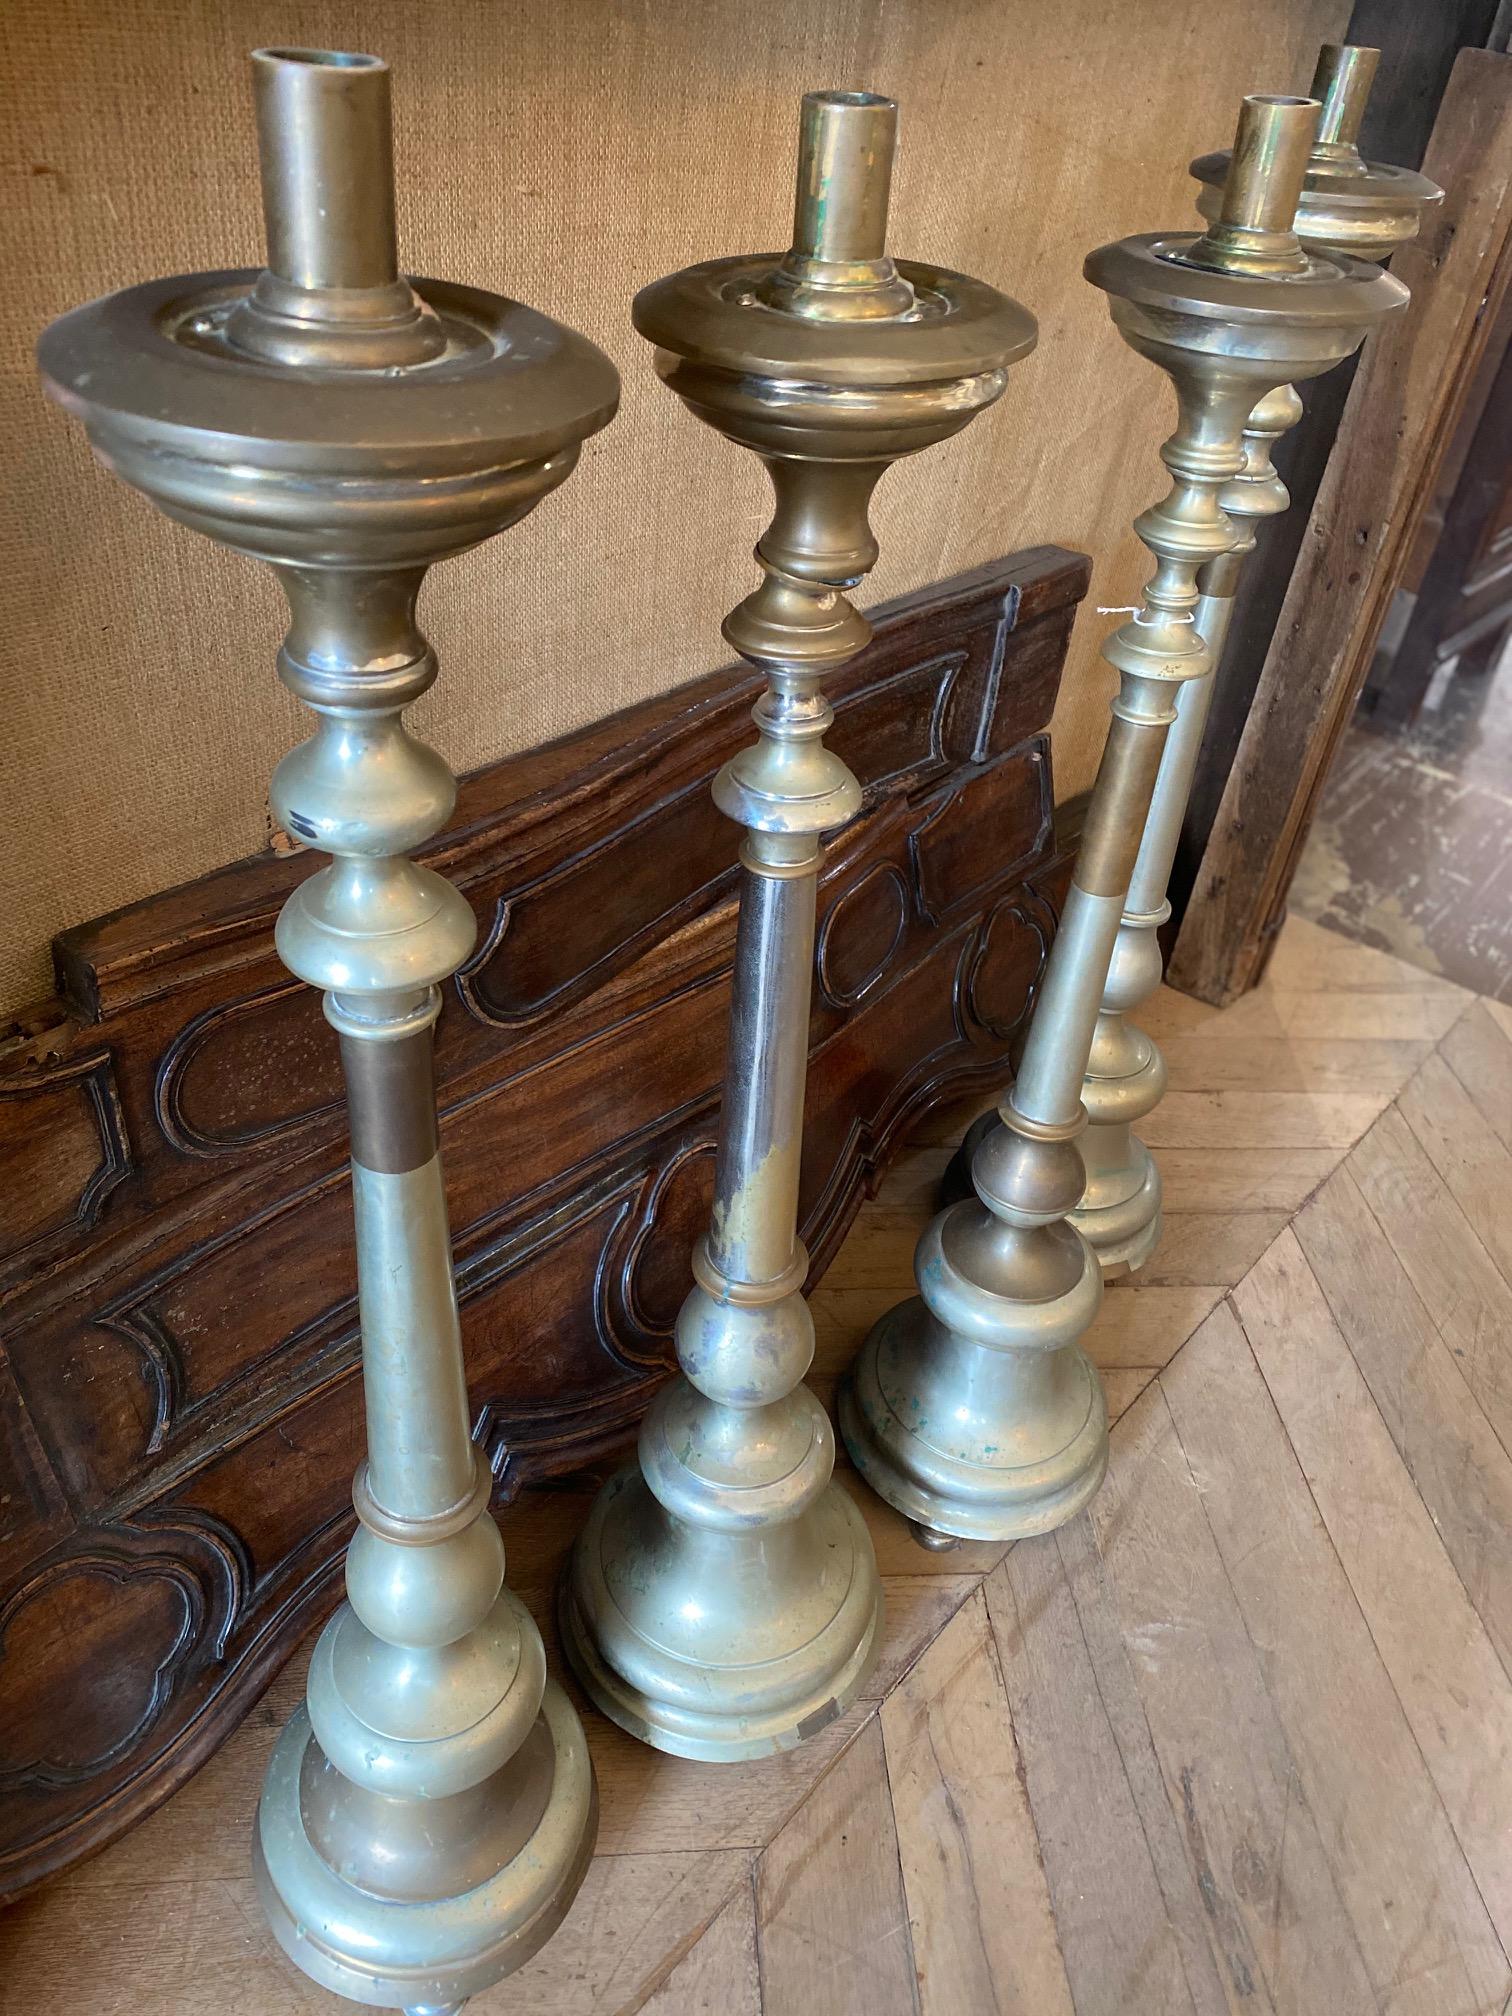 This set of four candlesticks originate from Spain, circa 18th century.

Measurements: 9